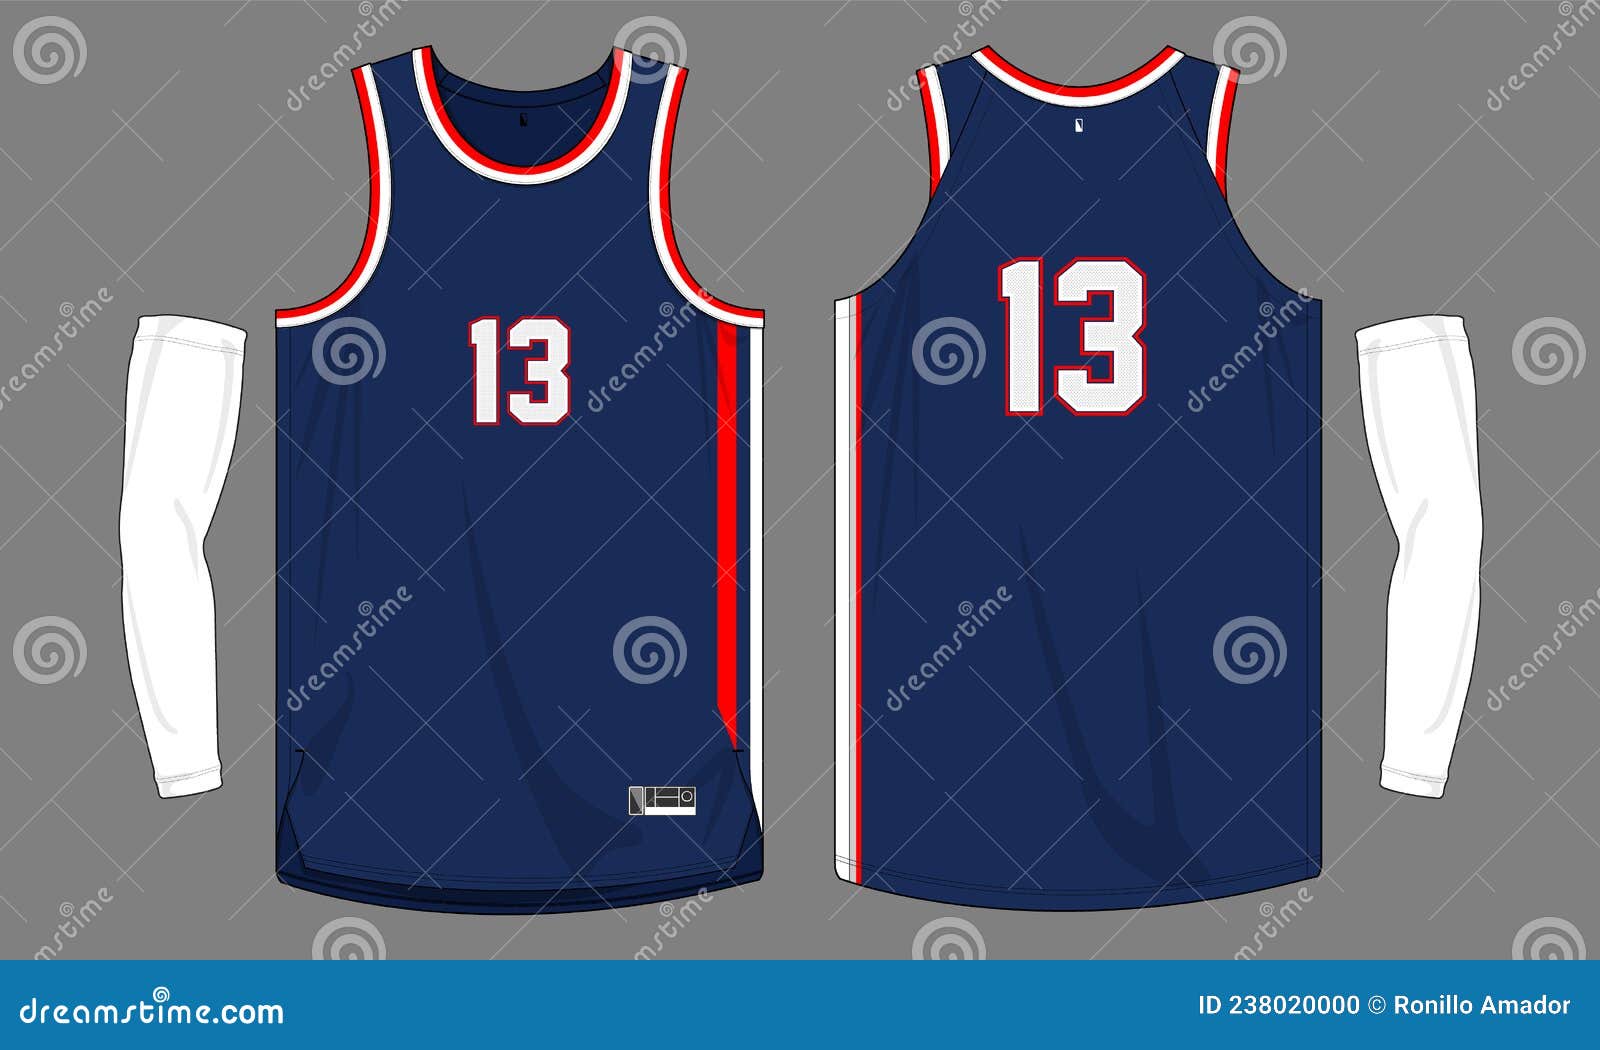 Design Template Basketball Set Jersey Ve